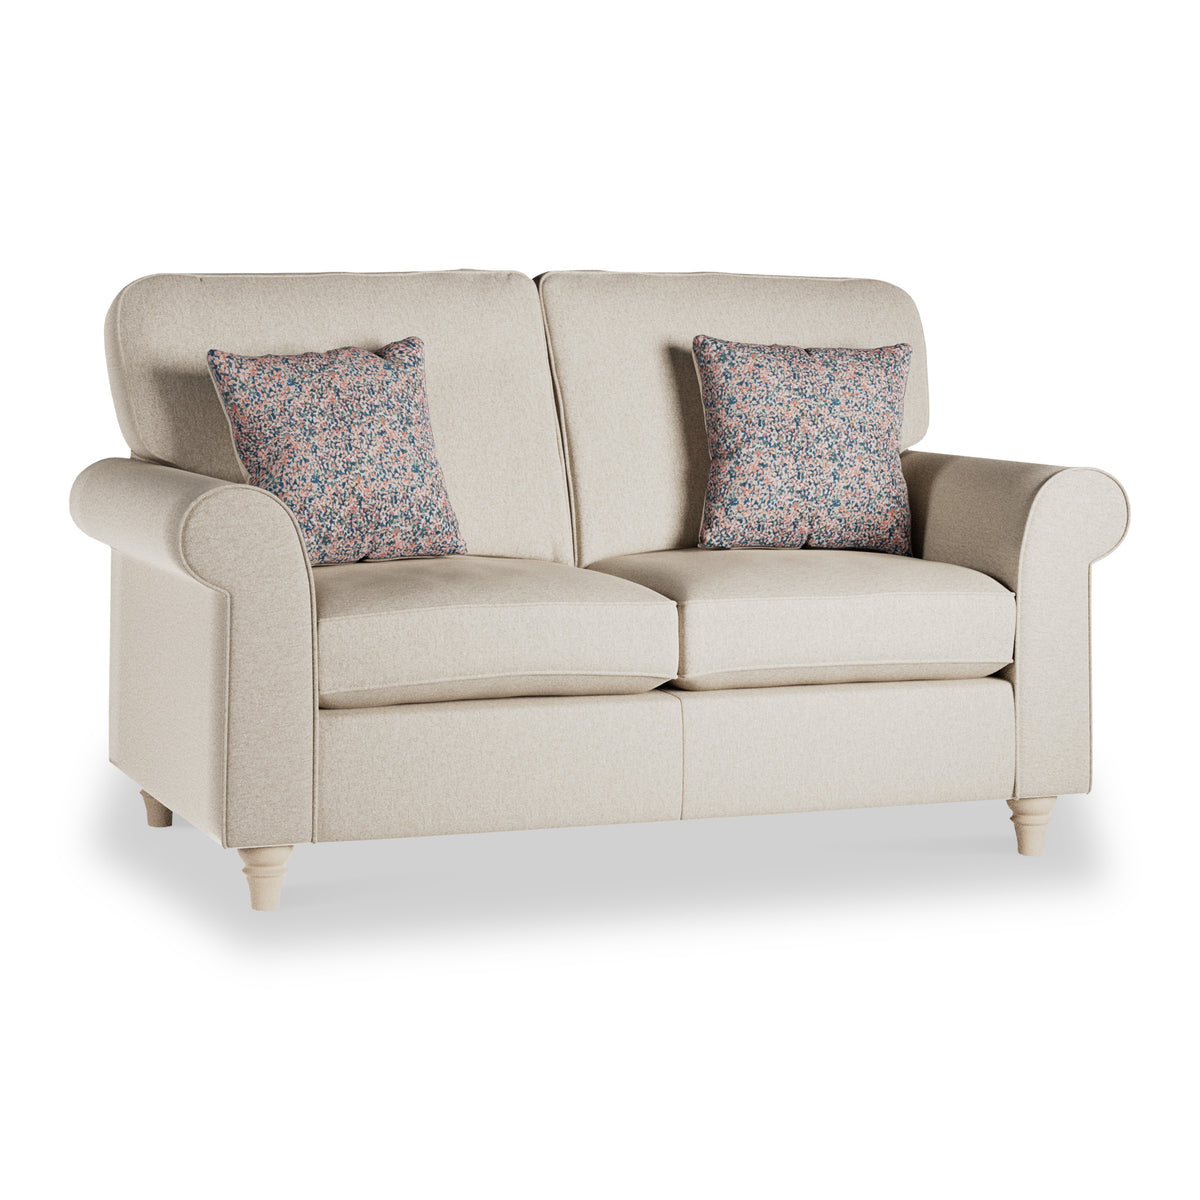 Thomas Sandstone 2 Seater Sofa from Roseland Furniture